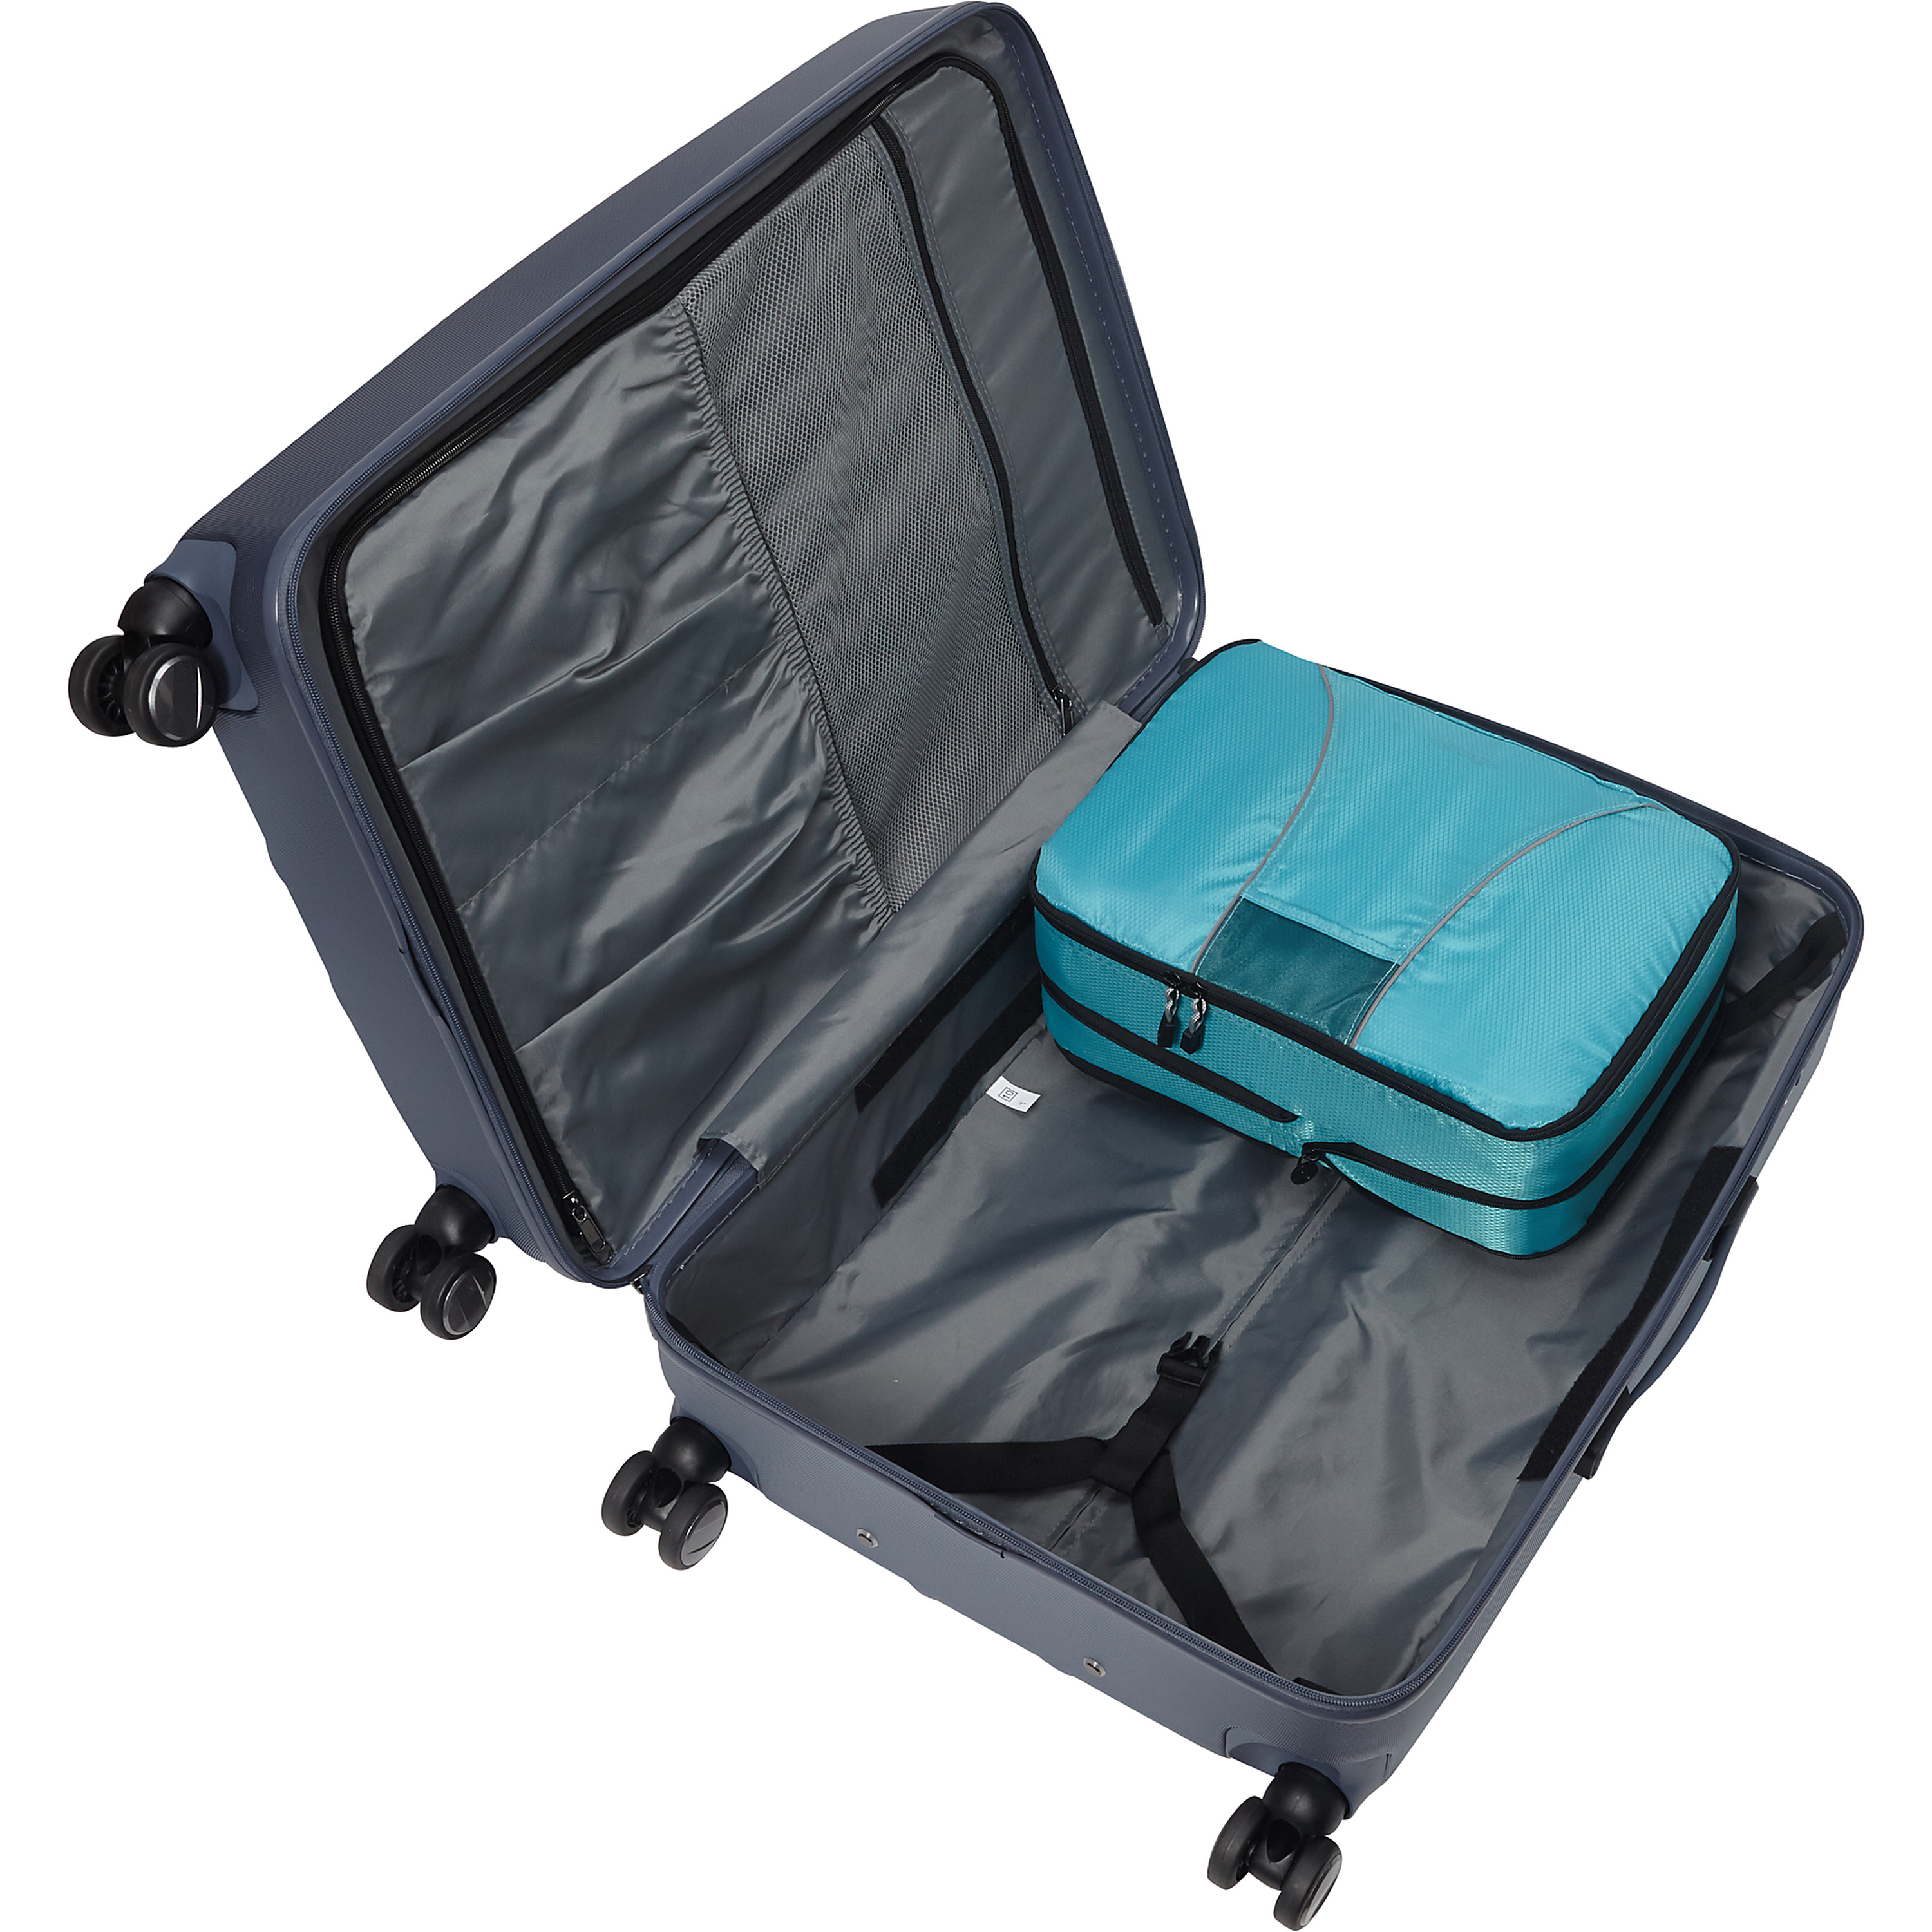 Buy Samsonite 3 Piece Compression Bag Kit for USD 8.00